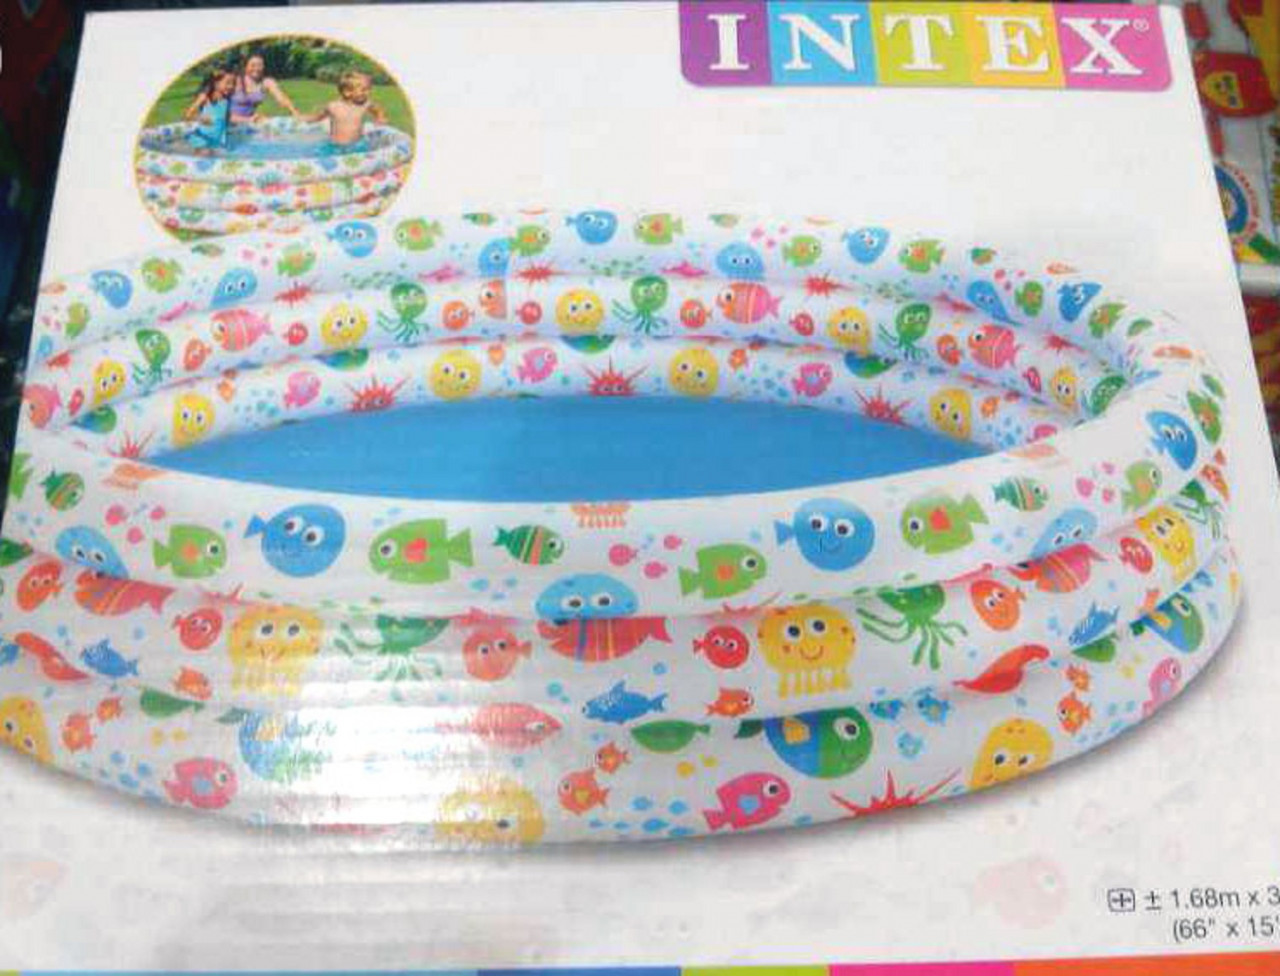 Intex Inflatable Baby Bathtub Pool 66 X 15